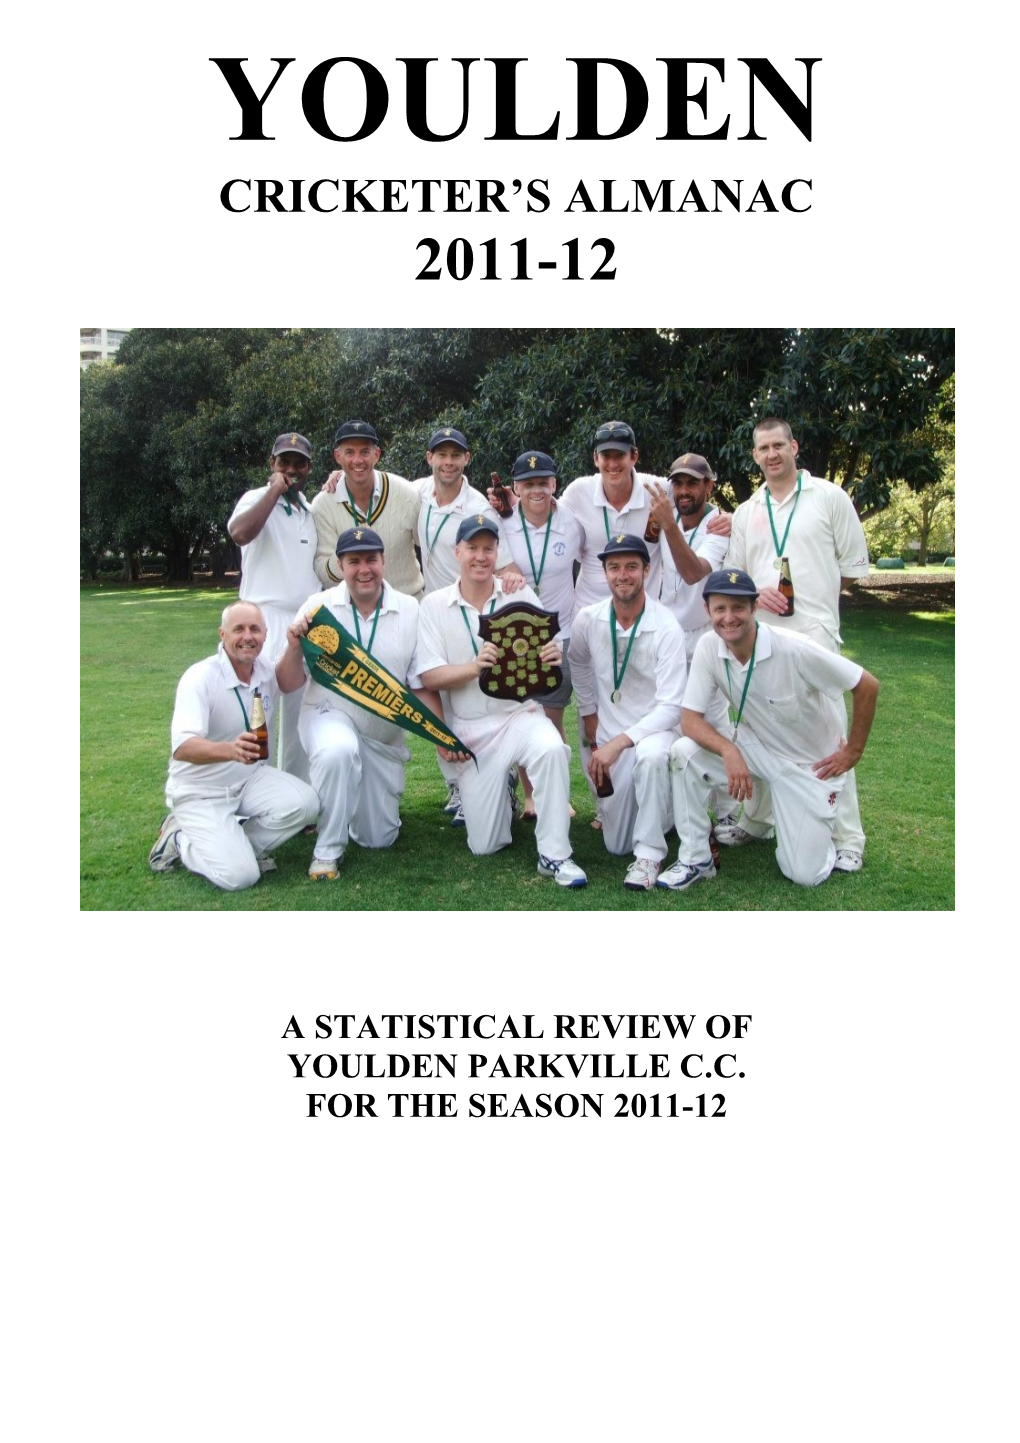 Youlden Cricketer's Almanac 2011-12